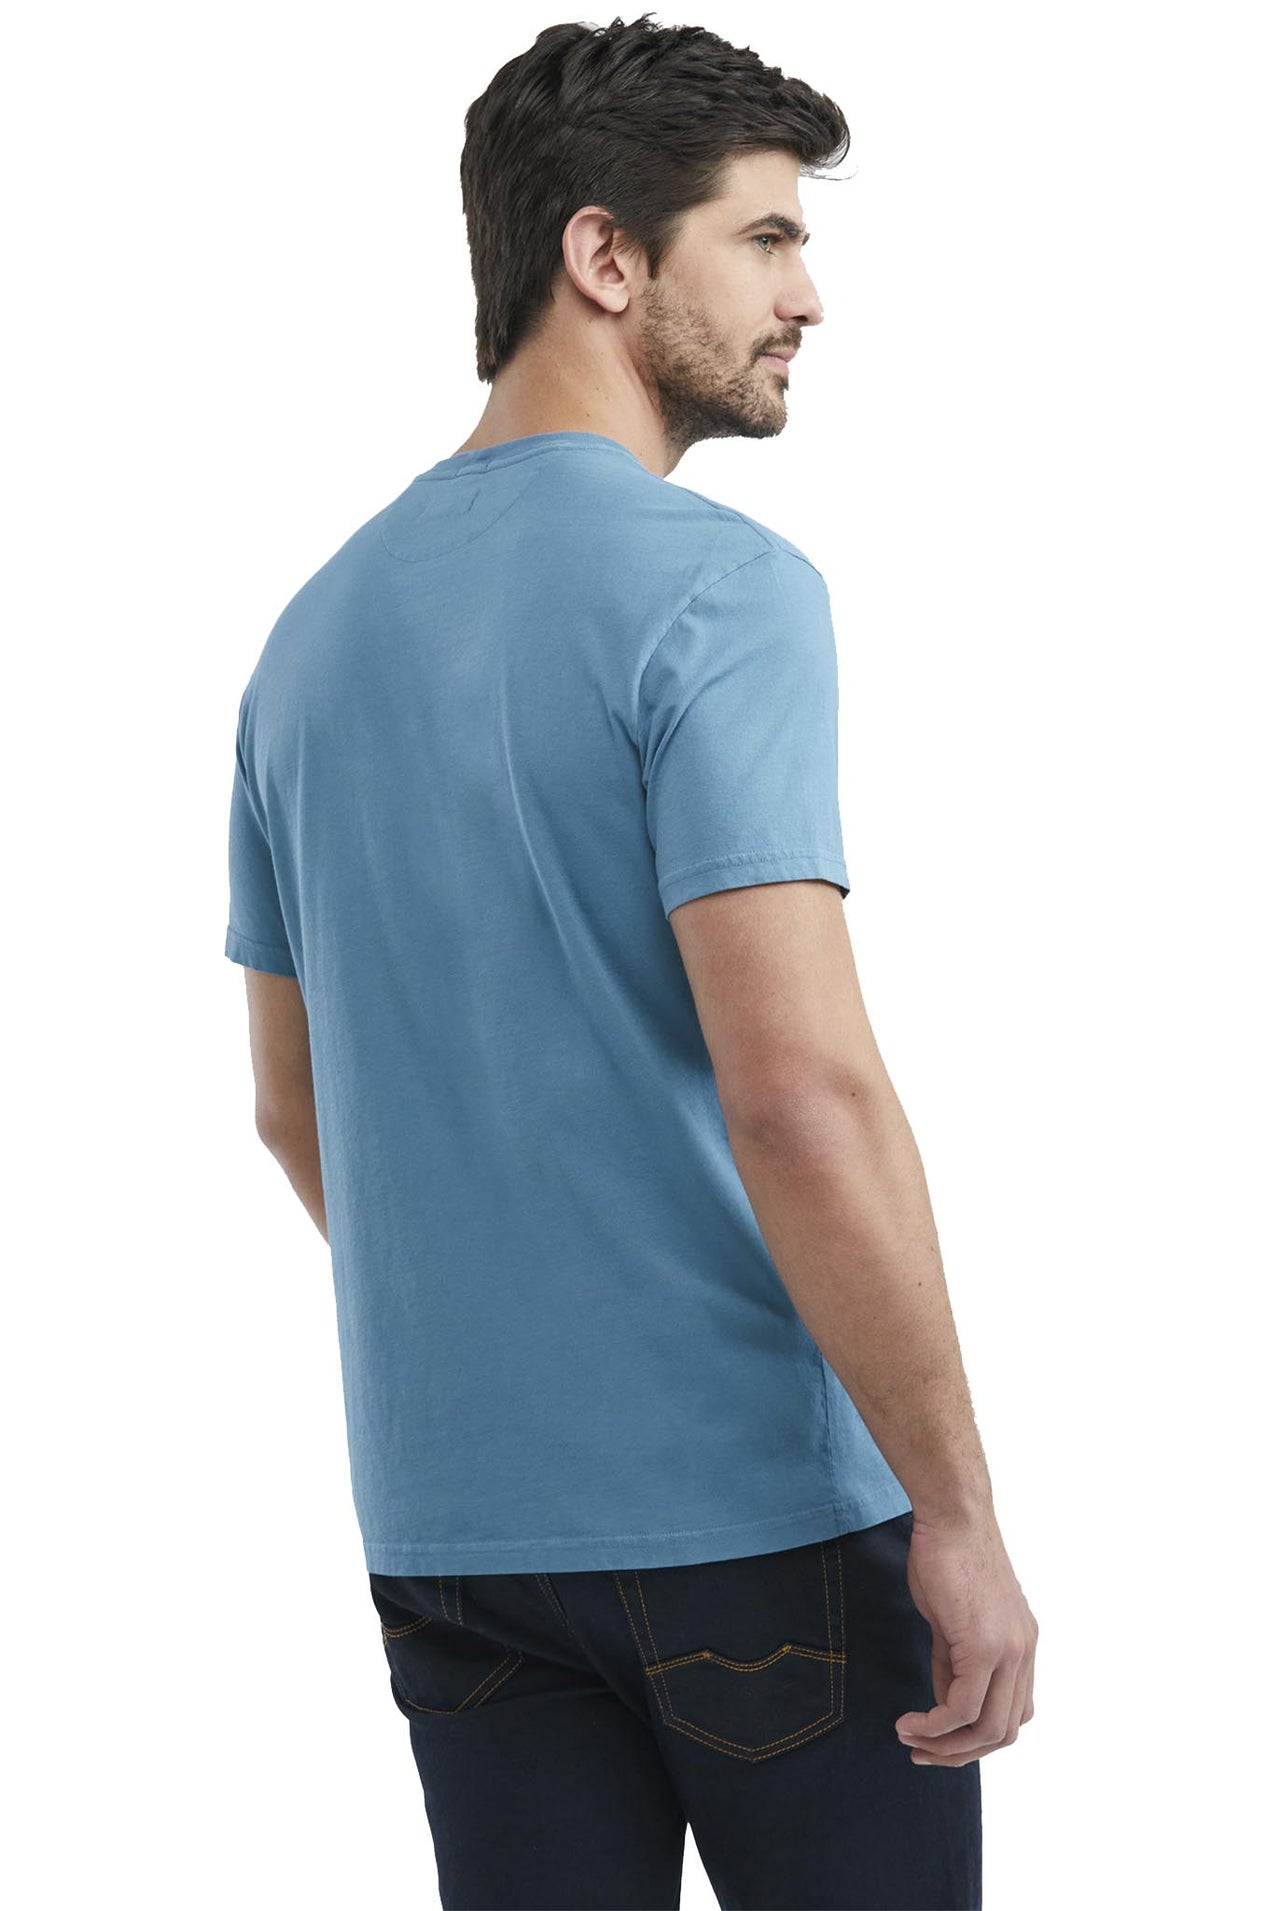 Camiseta Chevignon Corte ajustado, Manga Corta Cuello redondo - Azul Medio